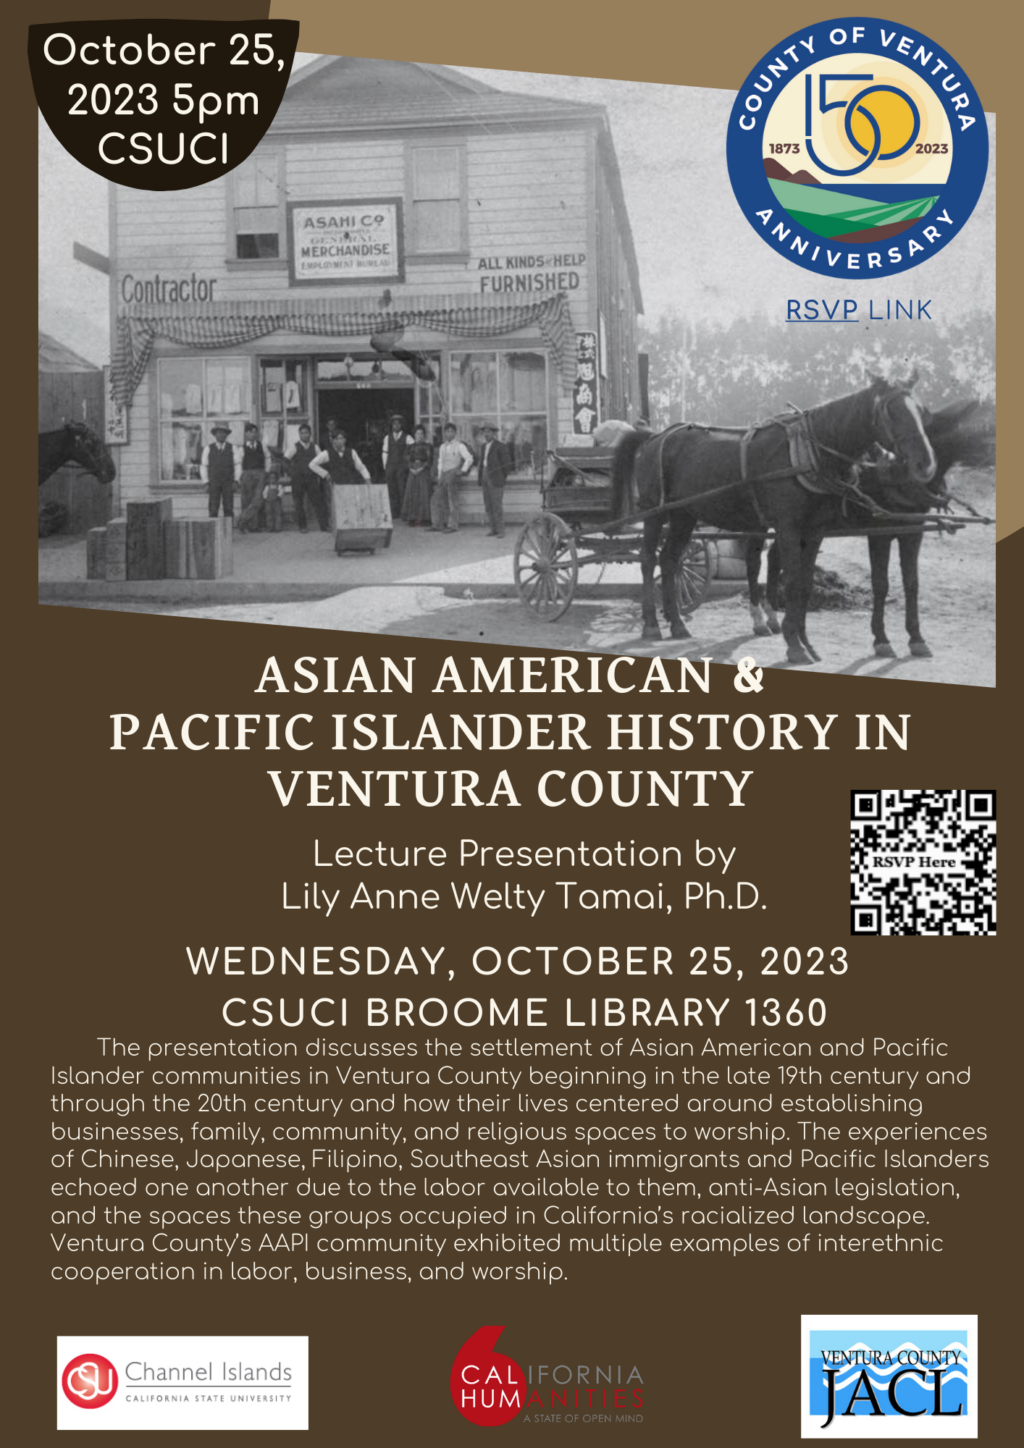 ASIAN AMERICAN & PACIFIC ISLANDER HISTORY IN VENTURA COUNTY